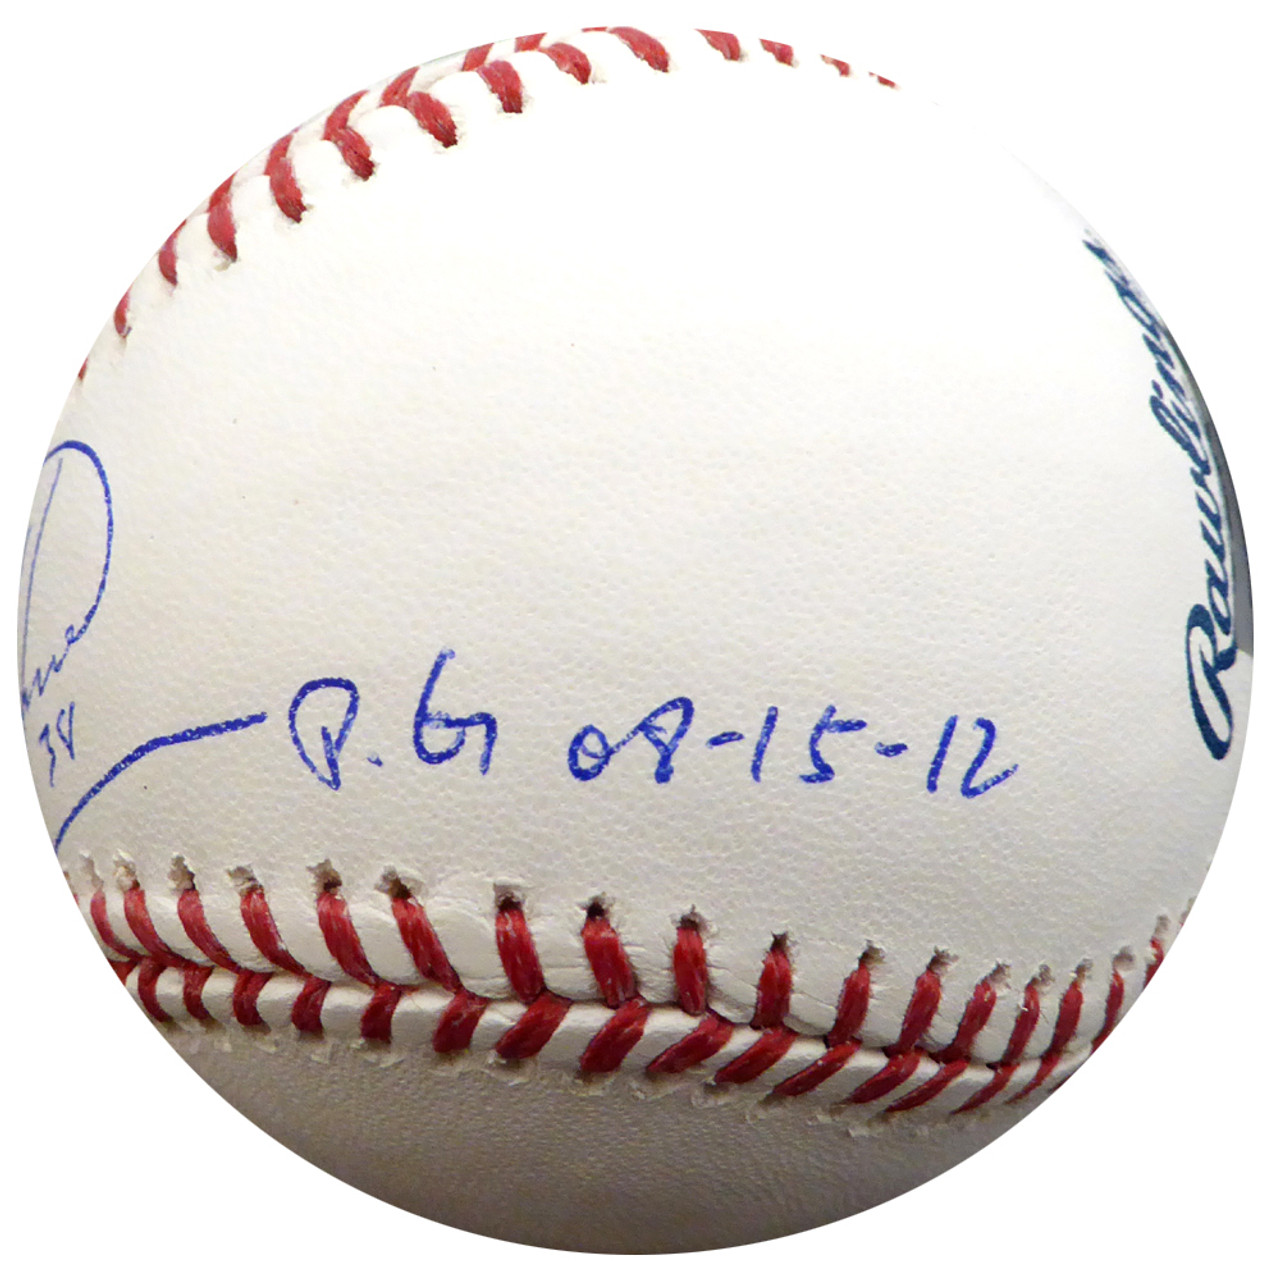 Felix Hernandez Autographed Baseball - Seattle Mariners Rawlings